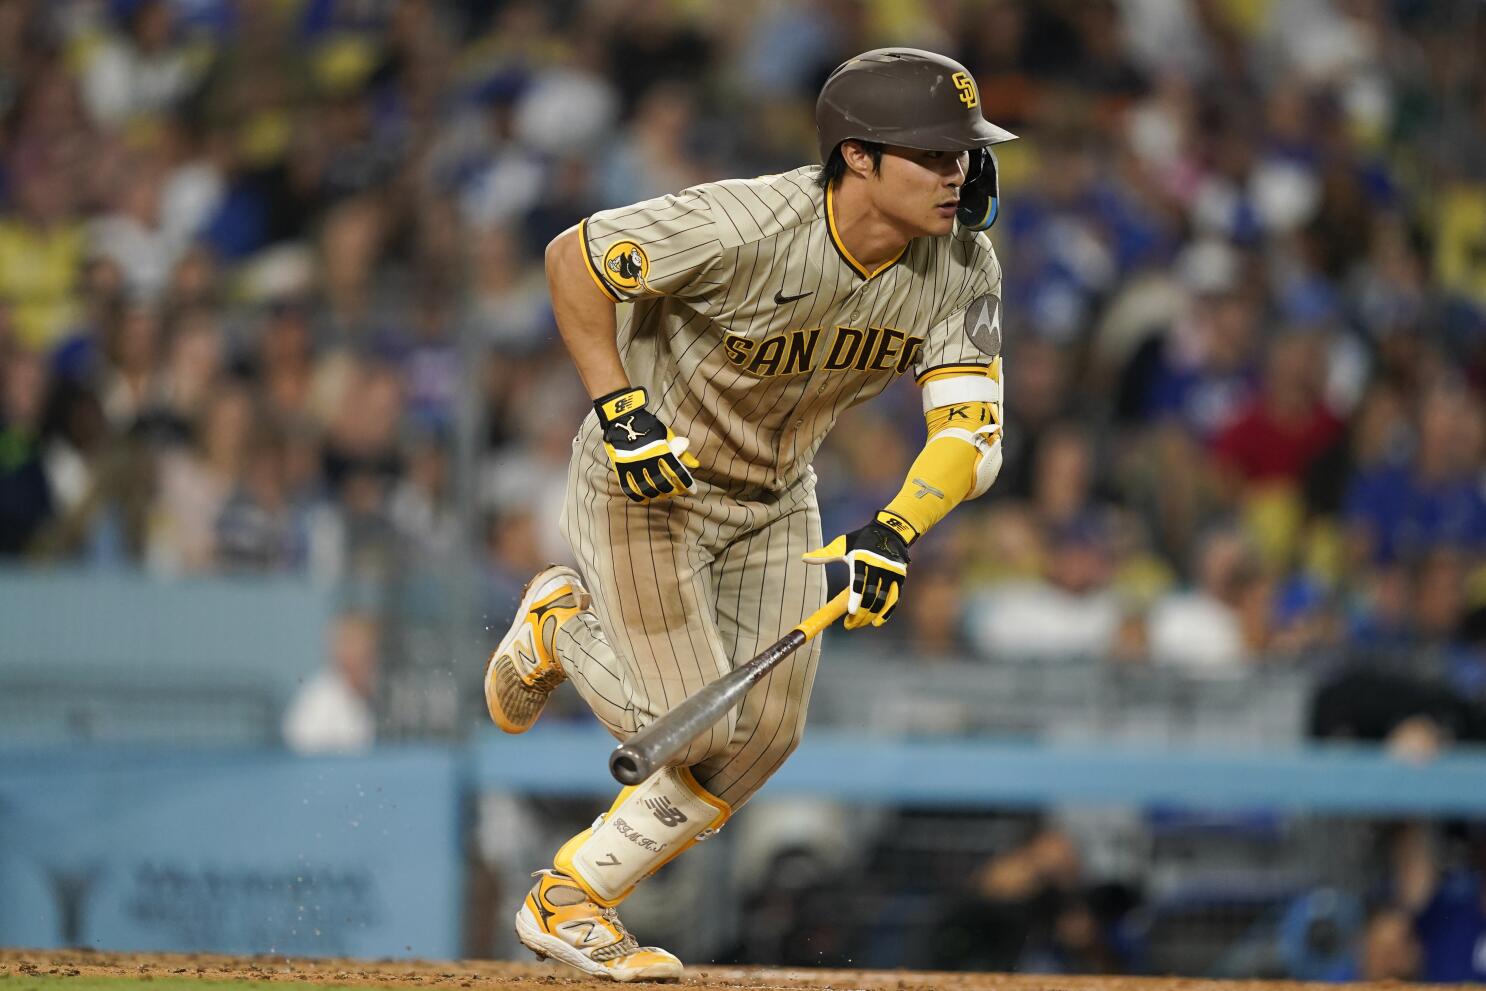 Padres' Kim Ha-seong strikes out in MLB debut